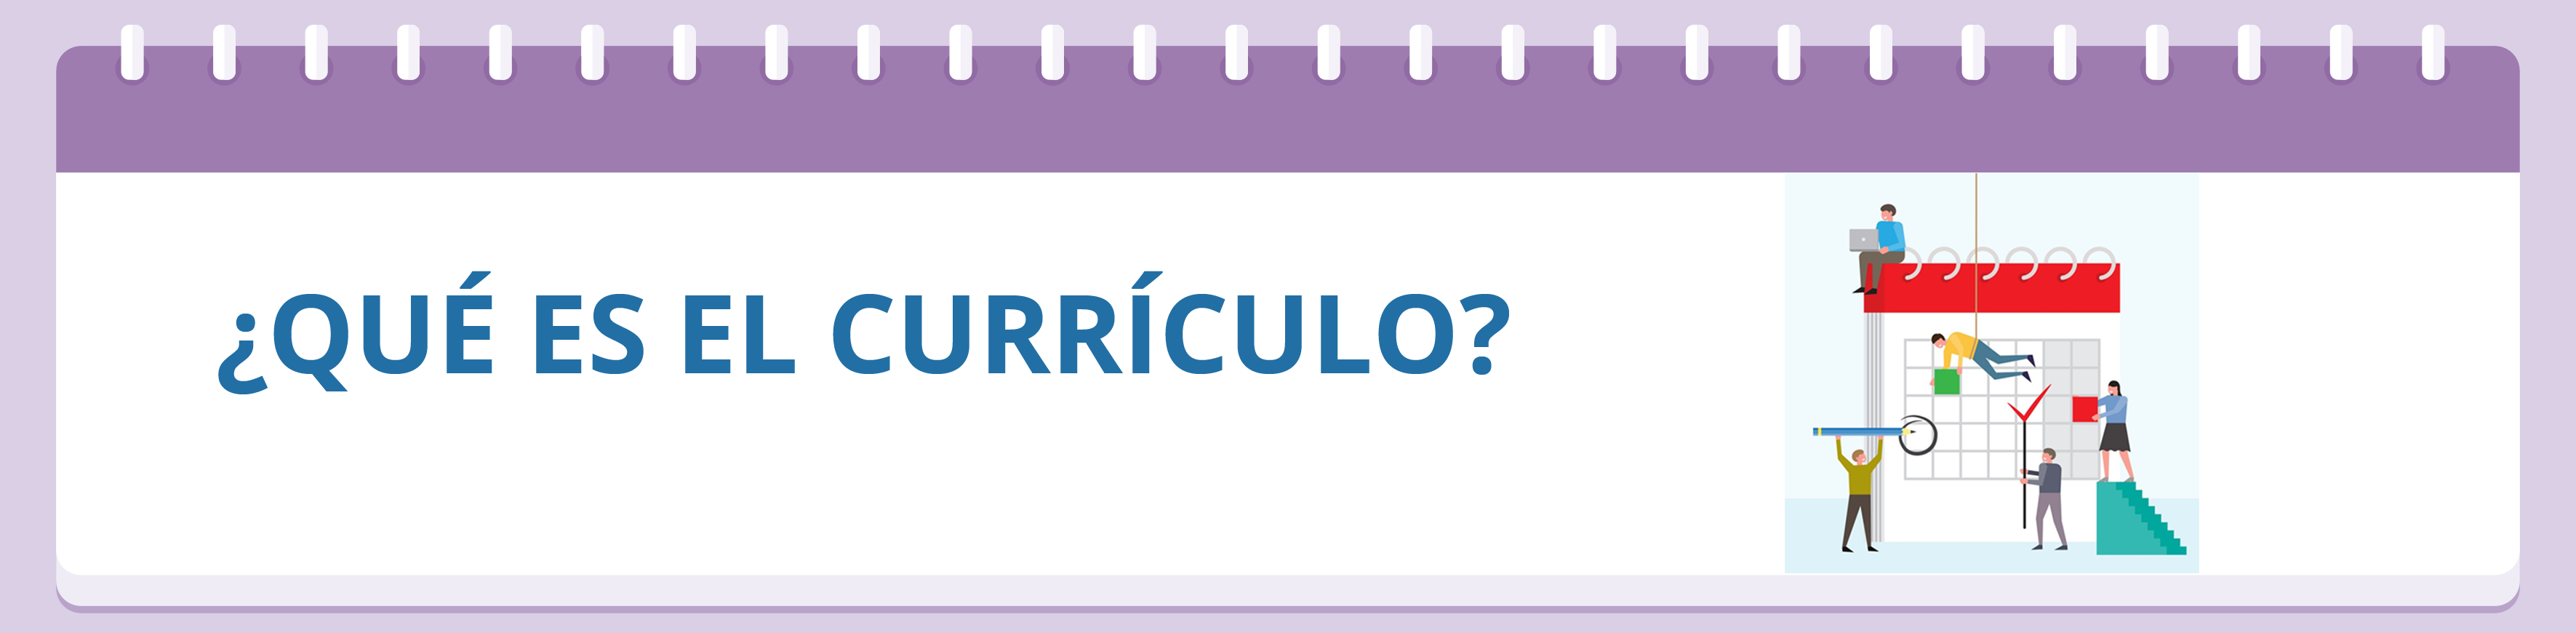 definicion_curriculo_diseno_curricular.png